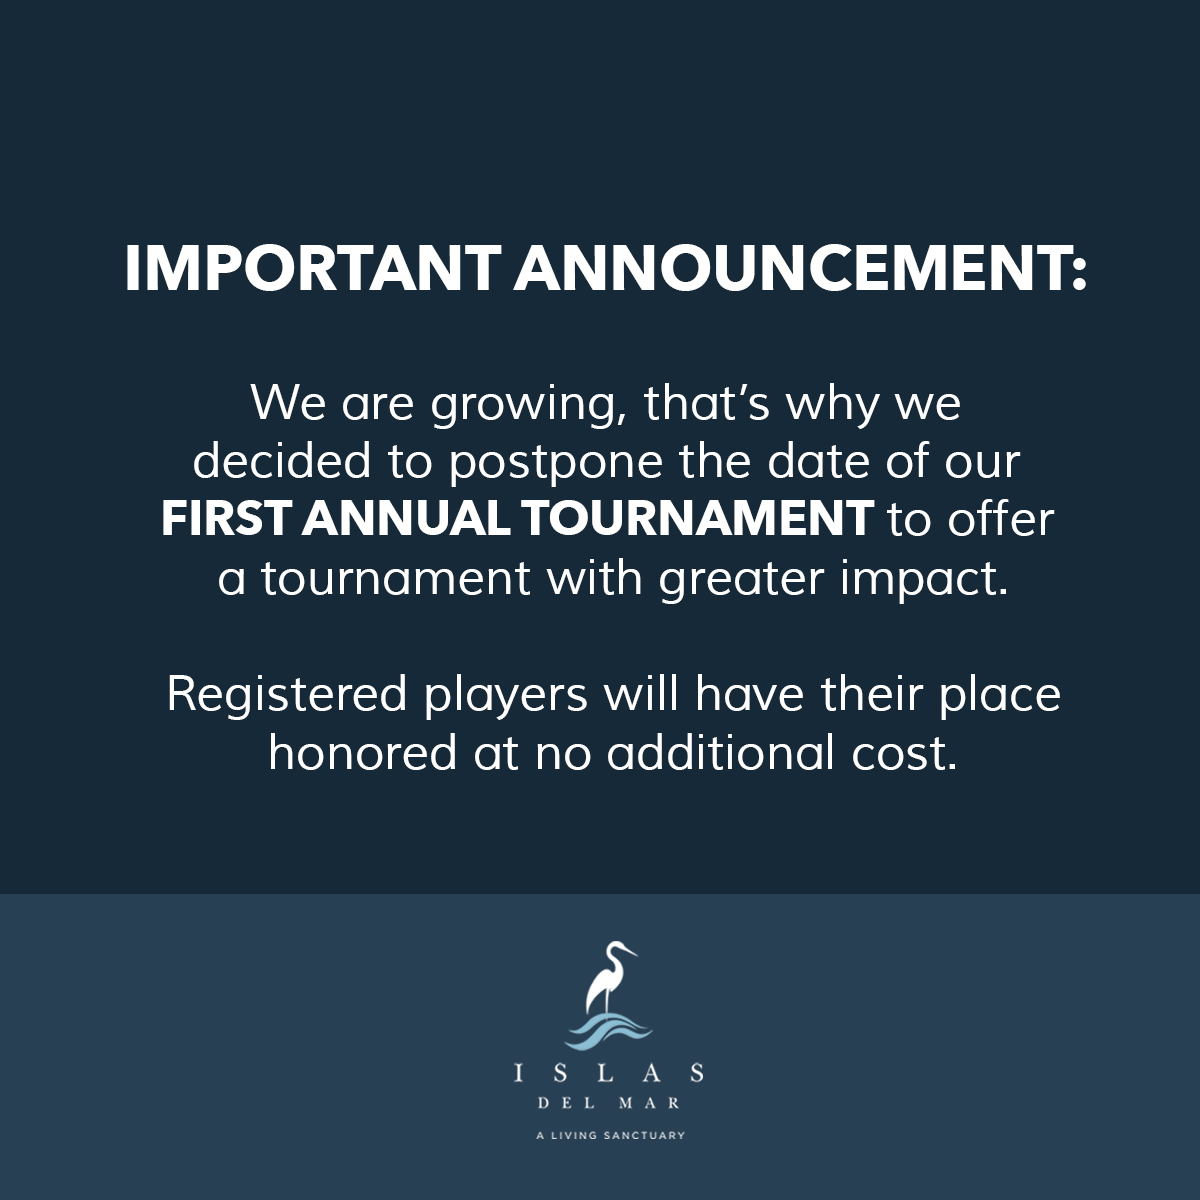 islas-golf-tourney-postponed-to-later-date ANNOUNCEMENT: Islas del Mar golf tournament - Date TBD